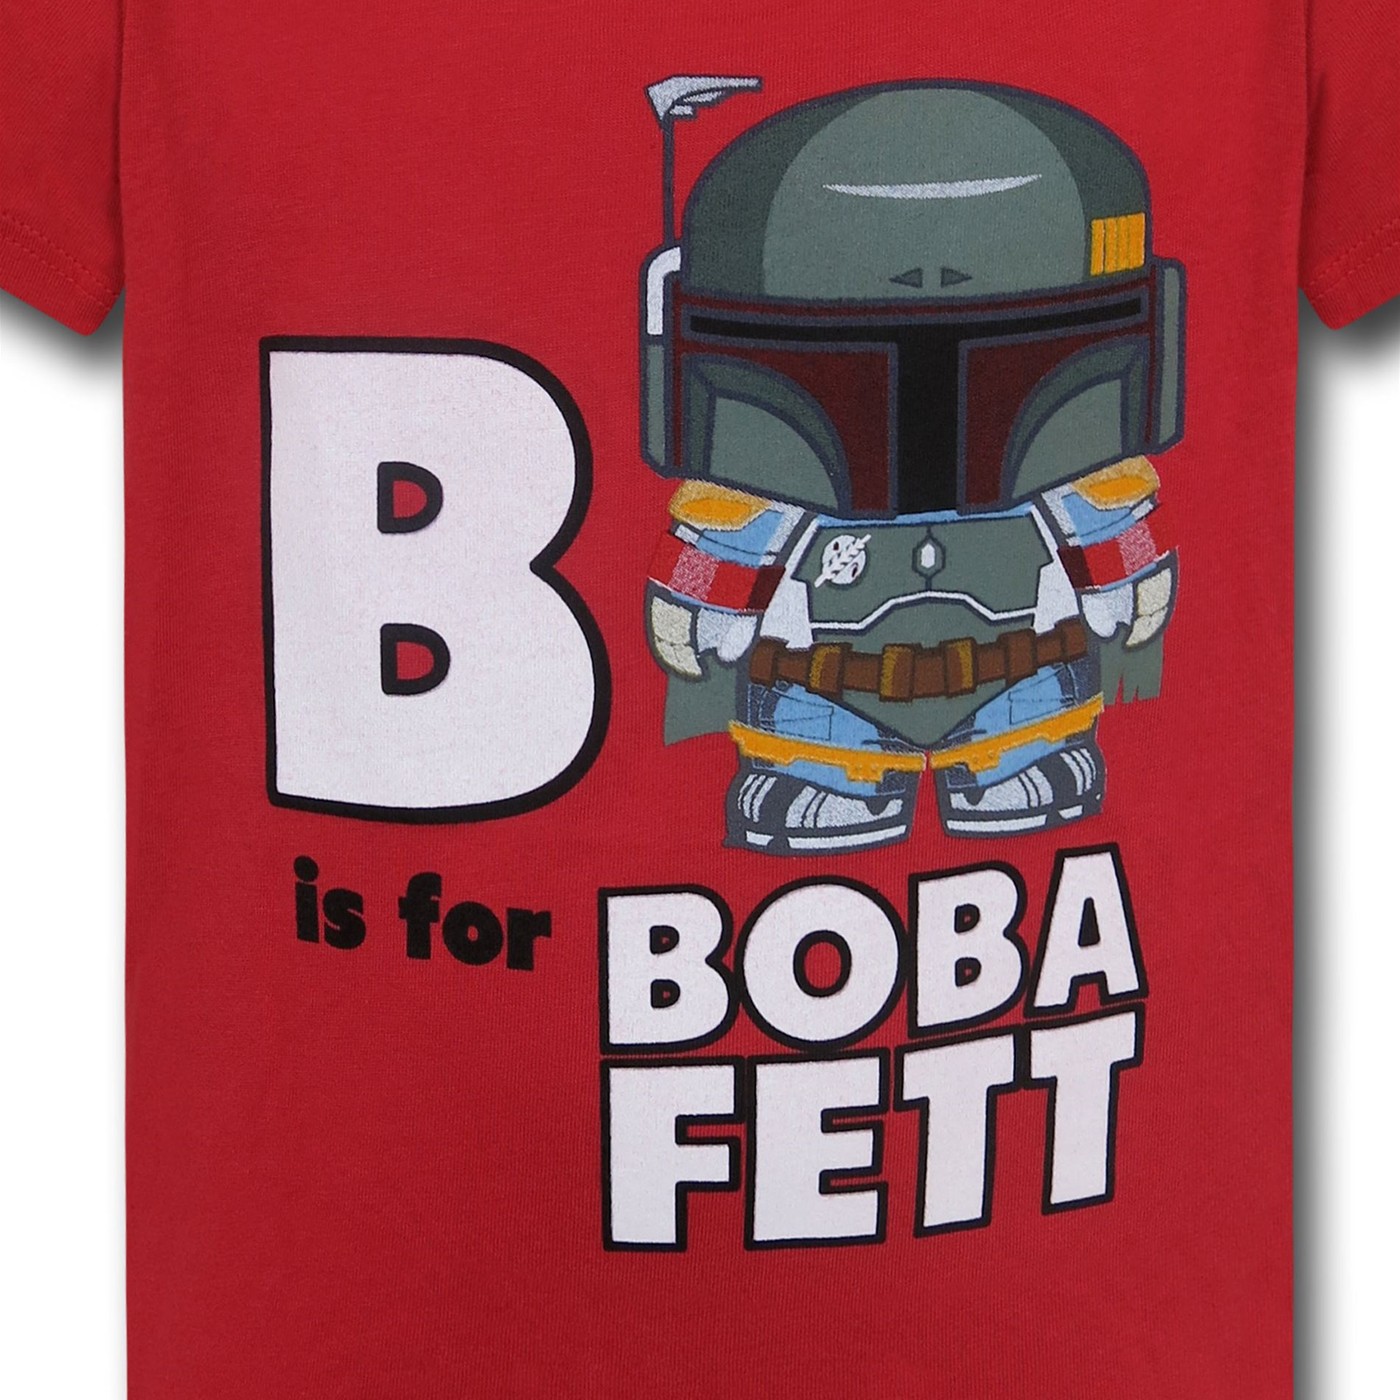 Star Wars B is for Boba Fett Toddler Red T-Shirt